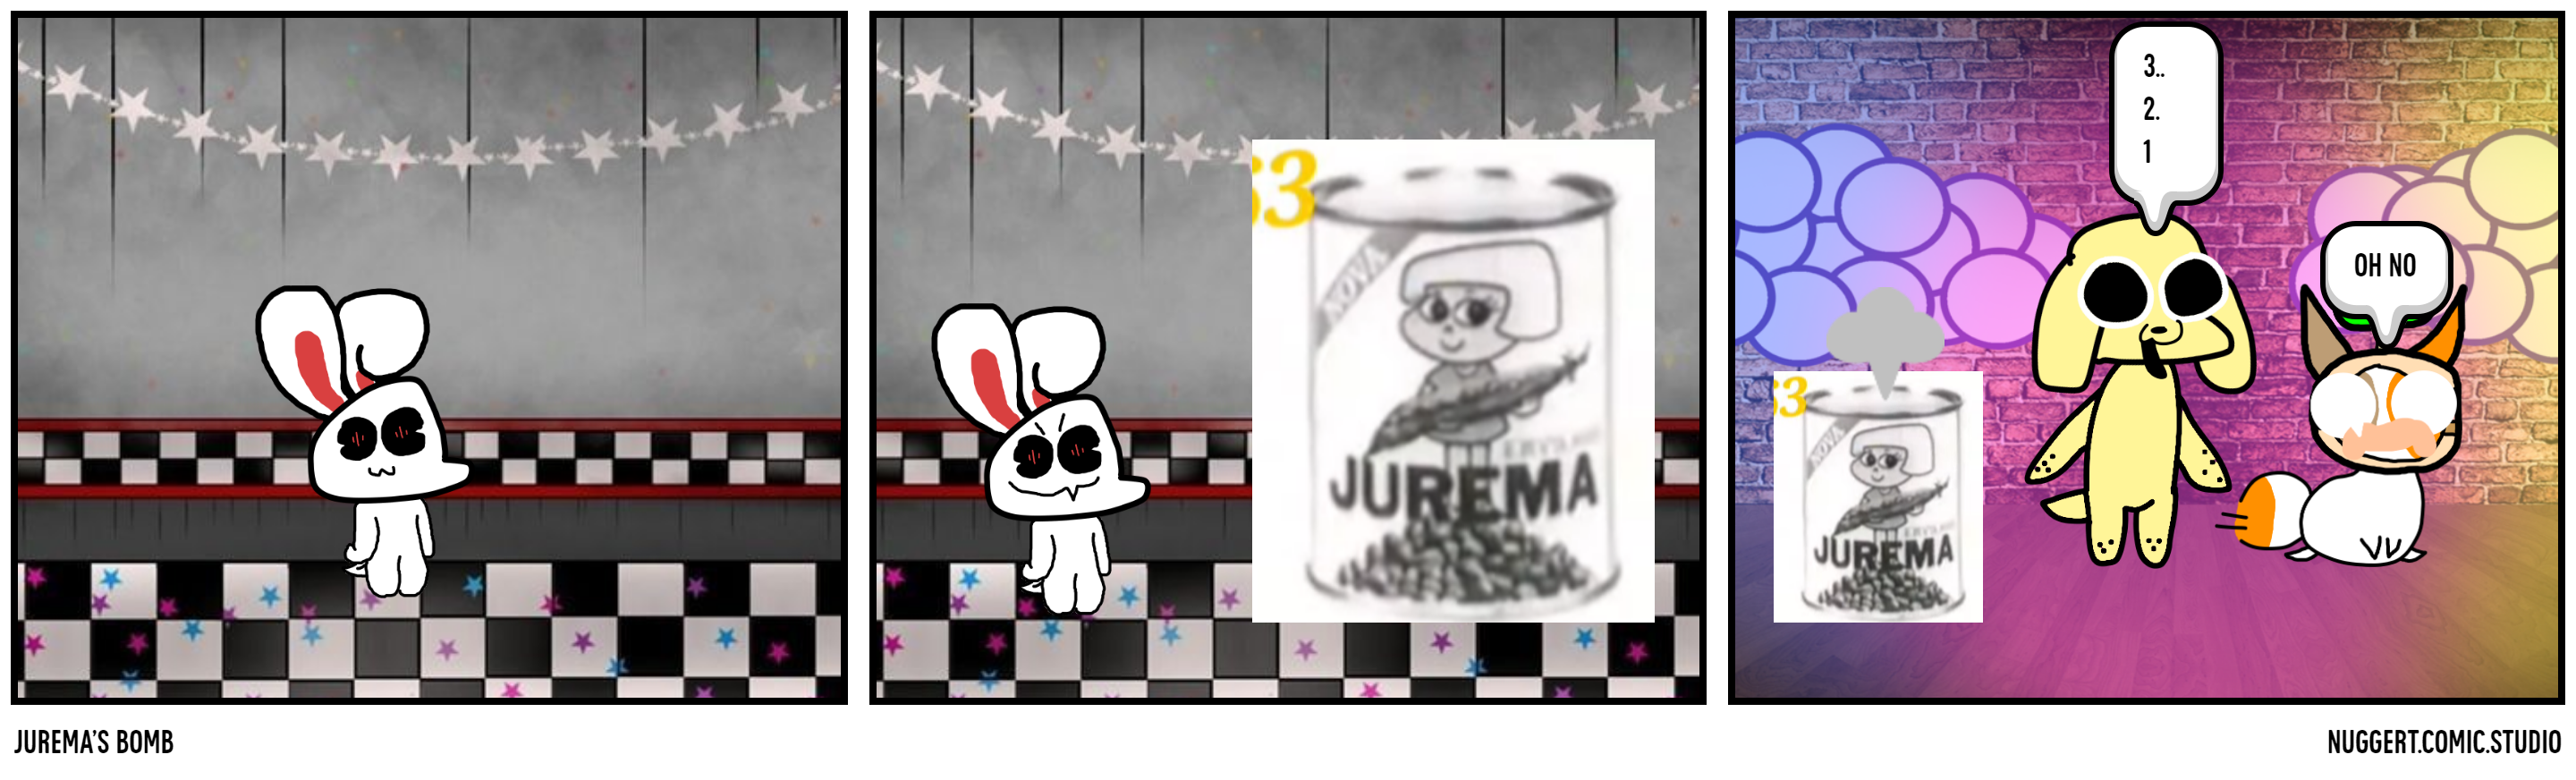 JUREMA's bomb